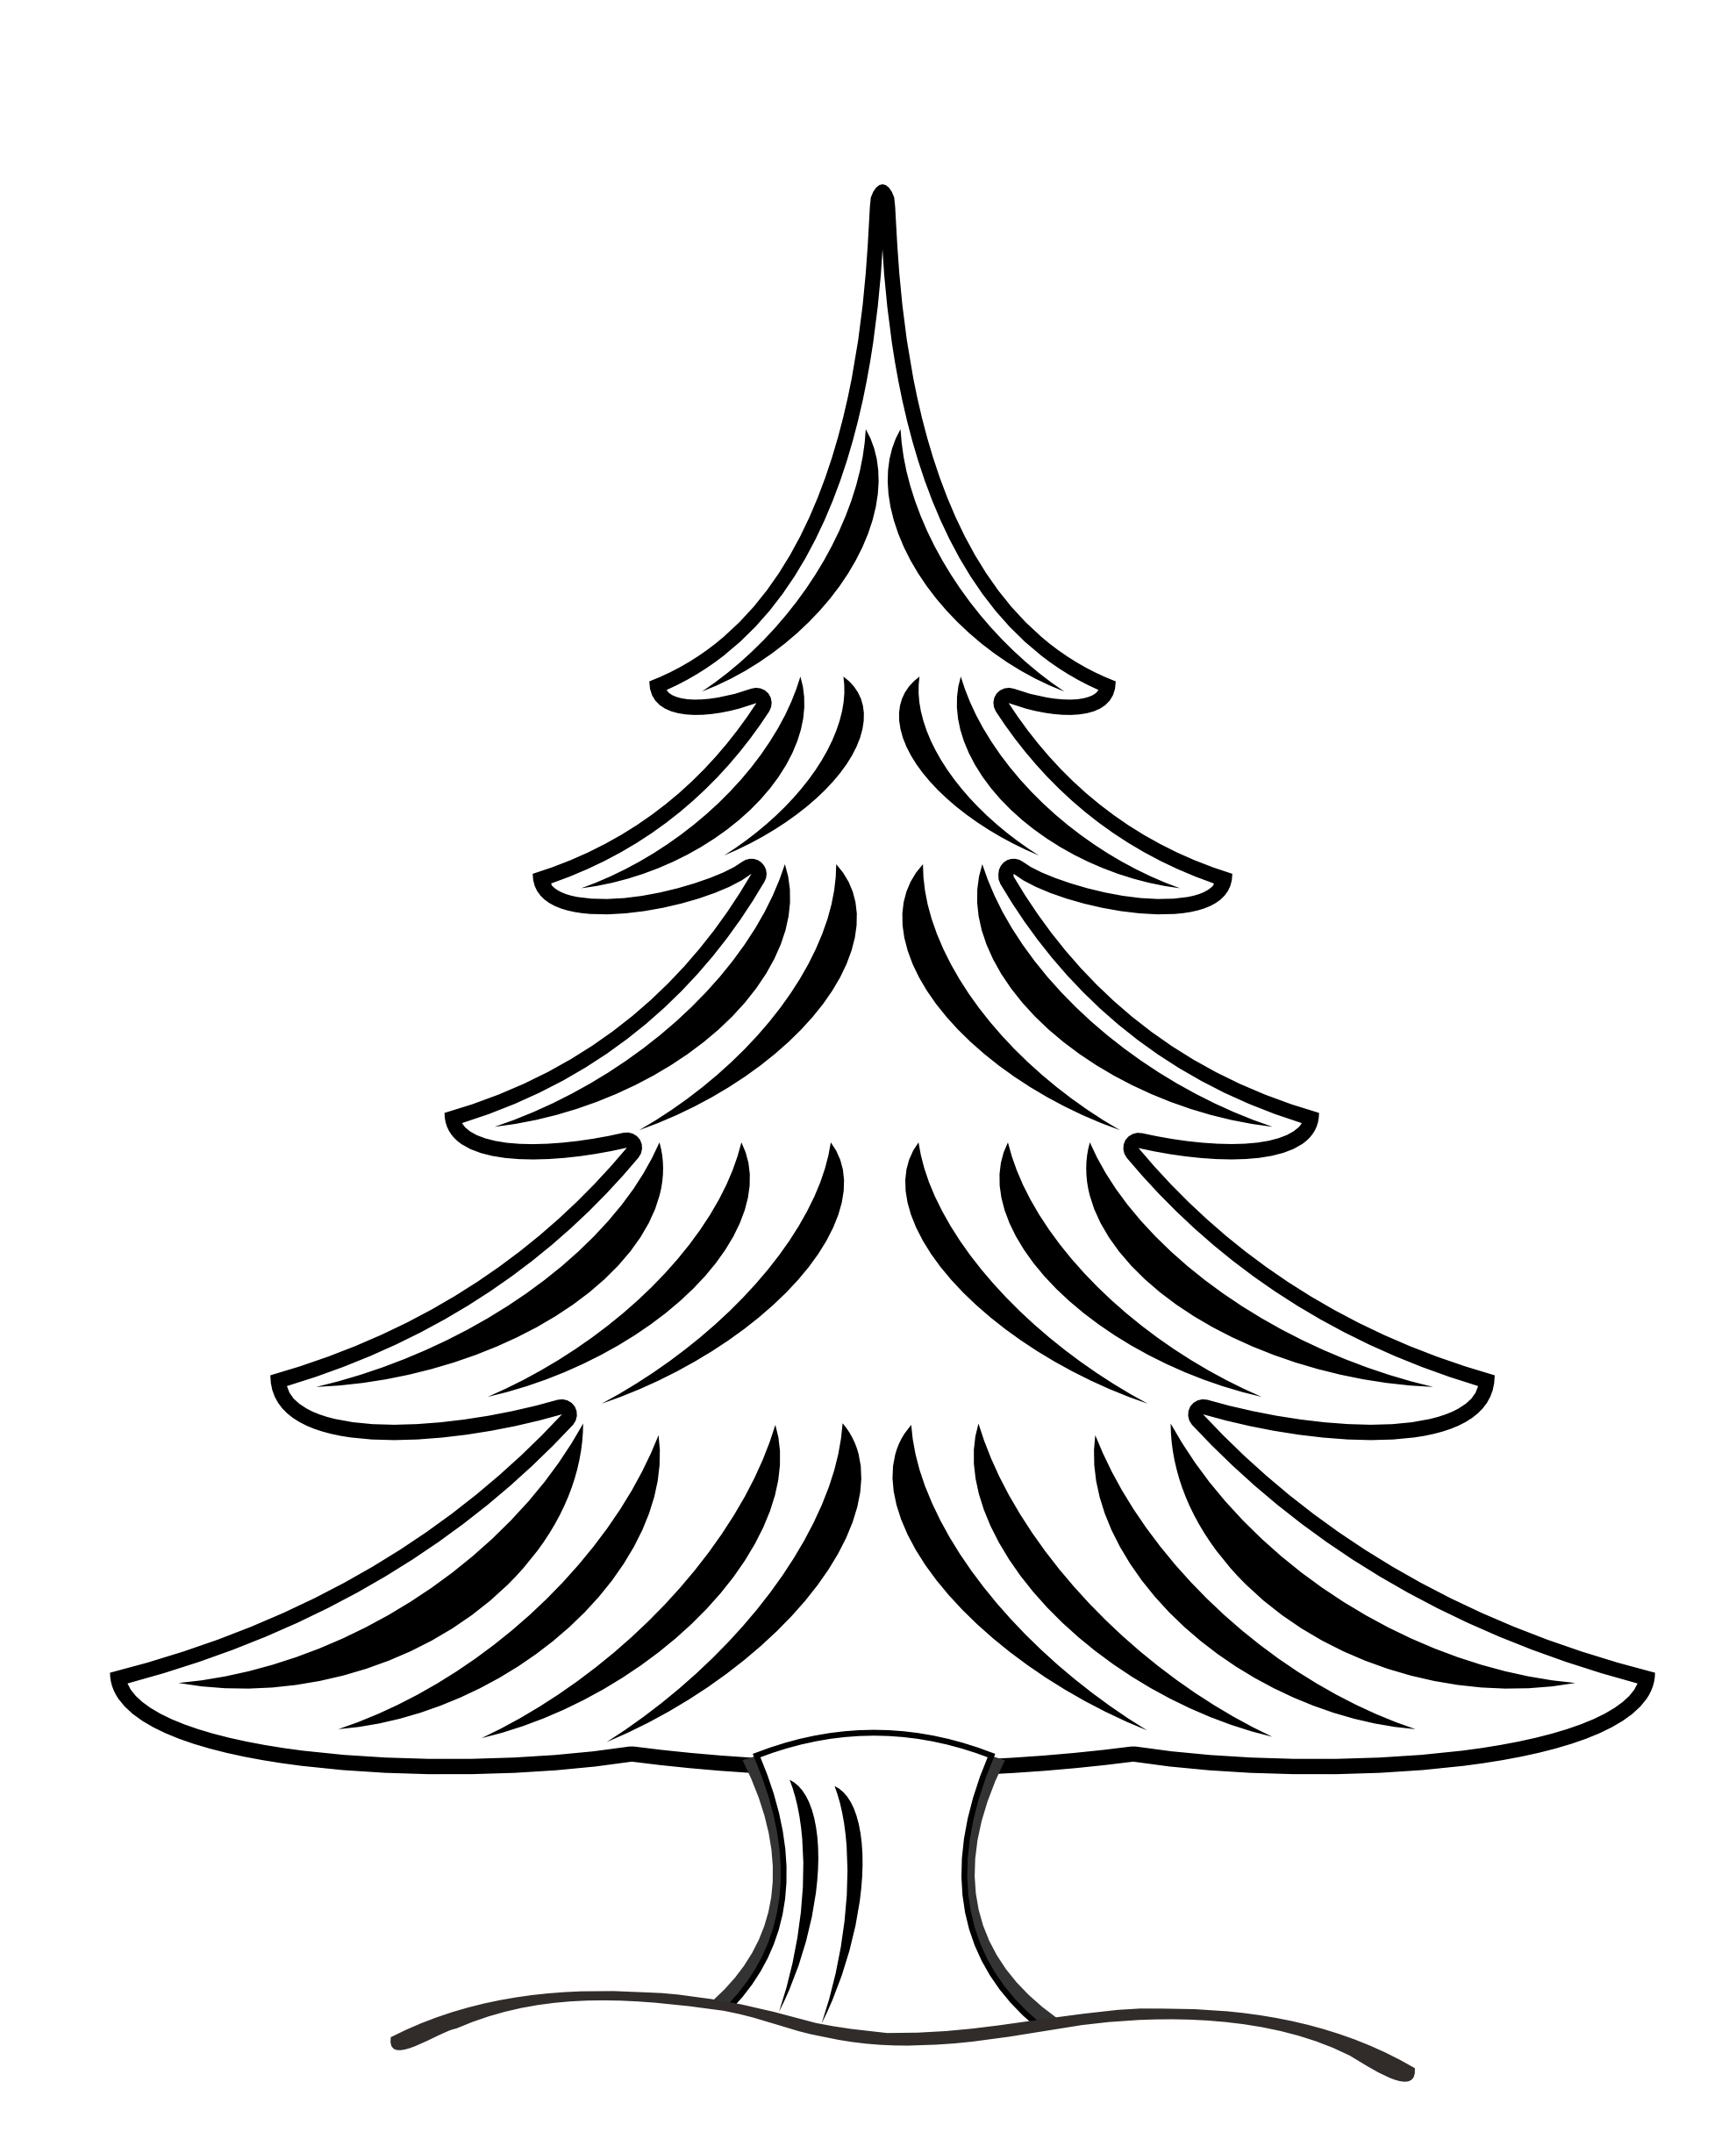 Pine tree clipart drawn